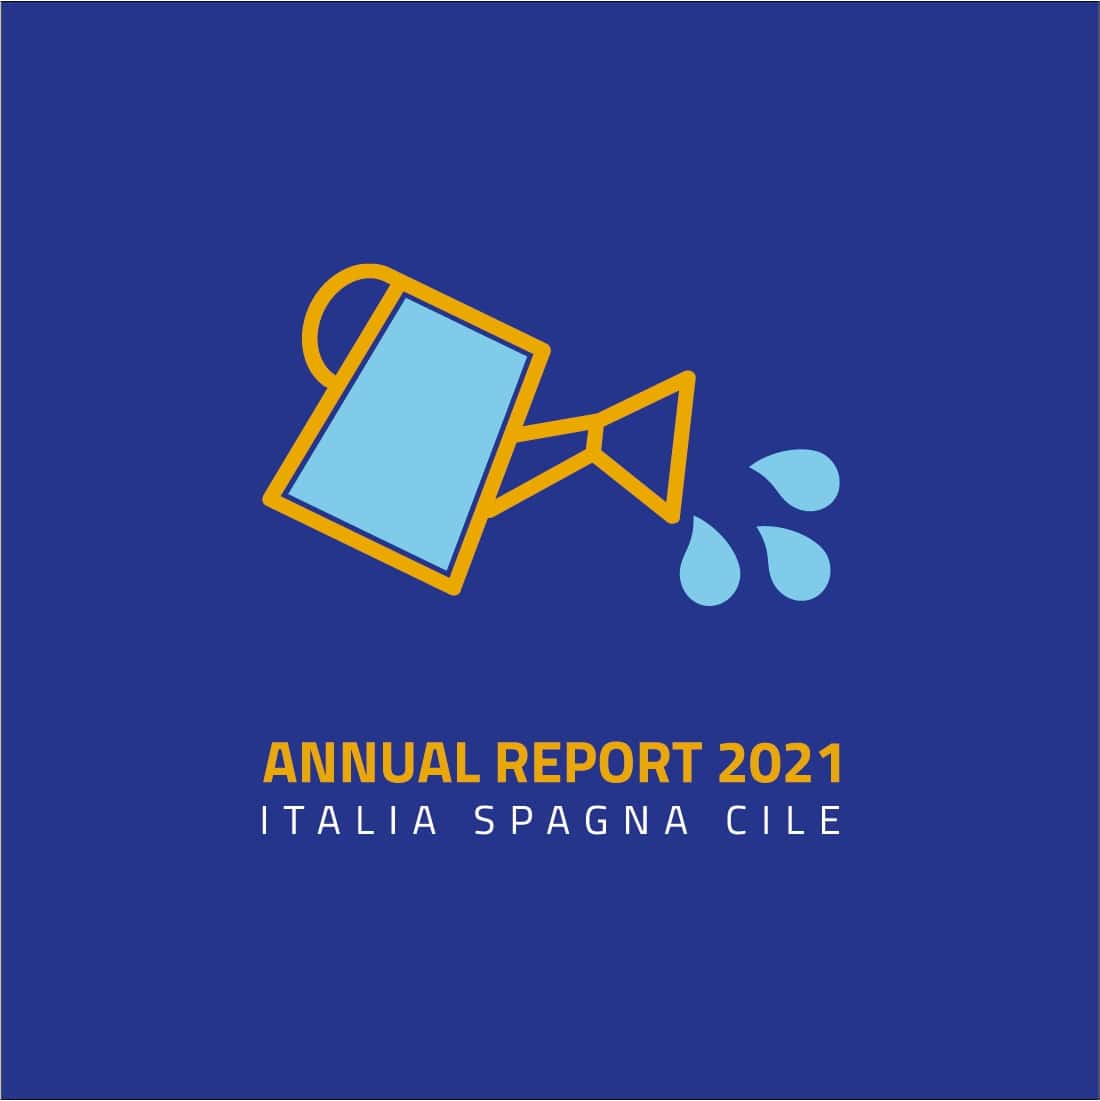 Annual Report 2021
